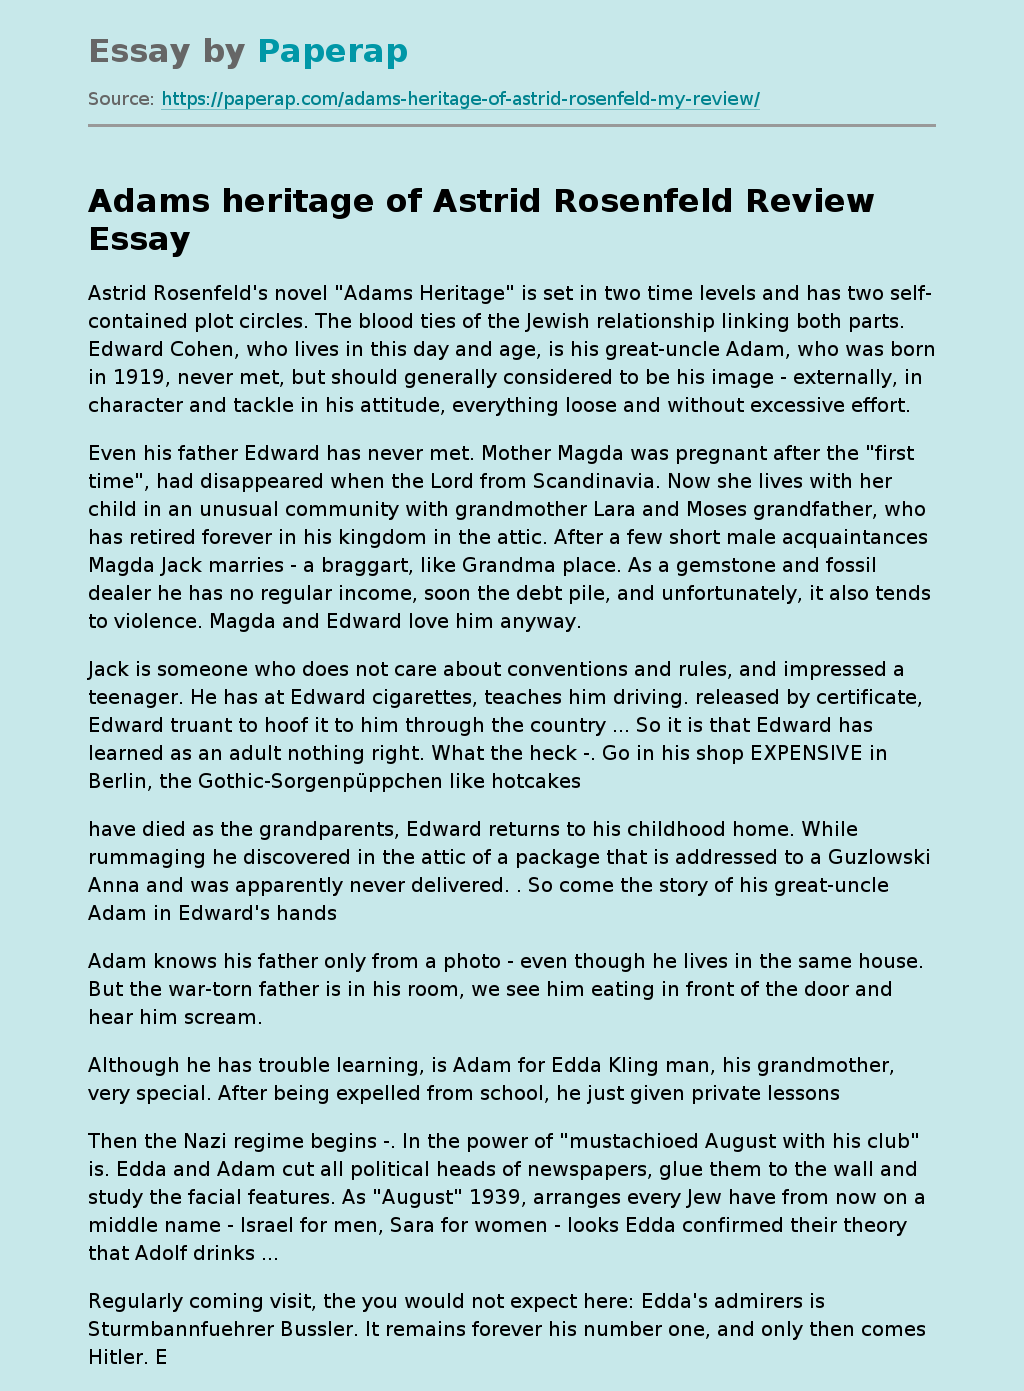 “Adams Heritage” of Astrid Rosenfeld